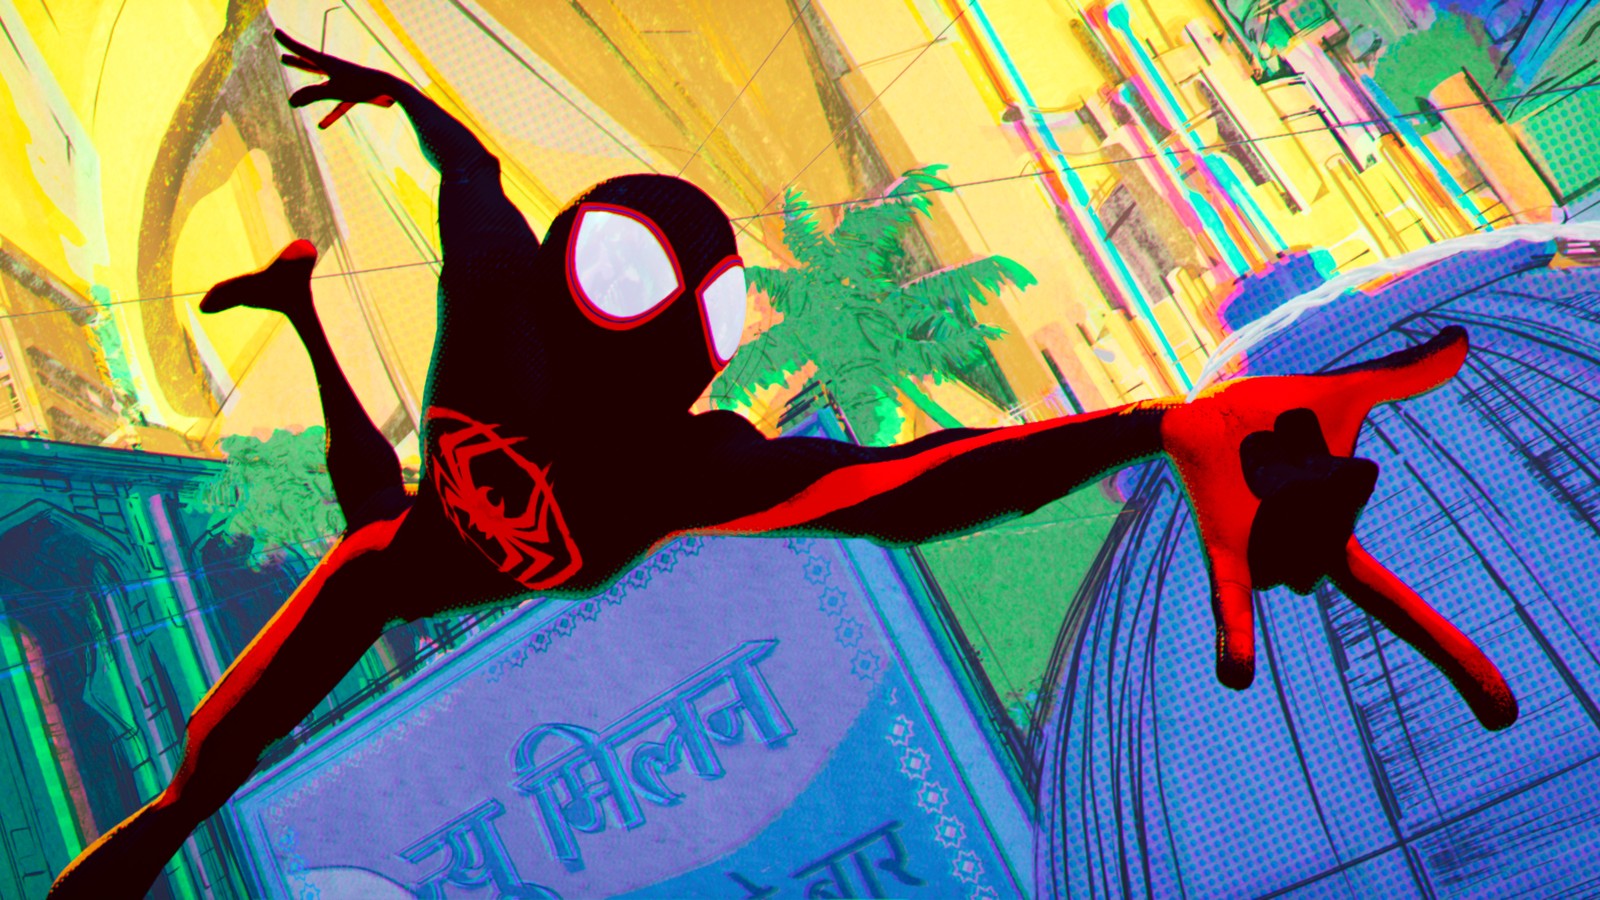 Spider-Man: Across the Spider-Verse' Is a Multiversal Masterpiece